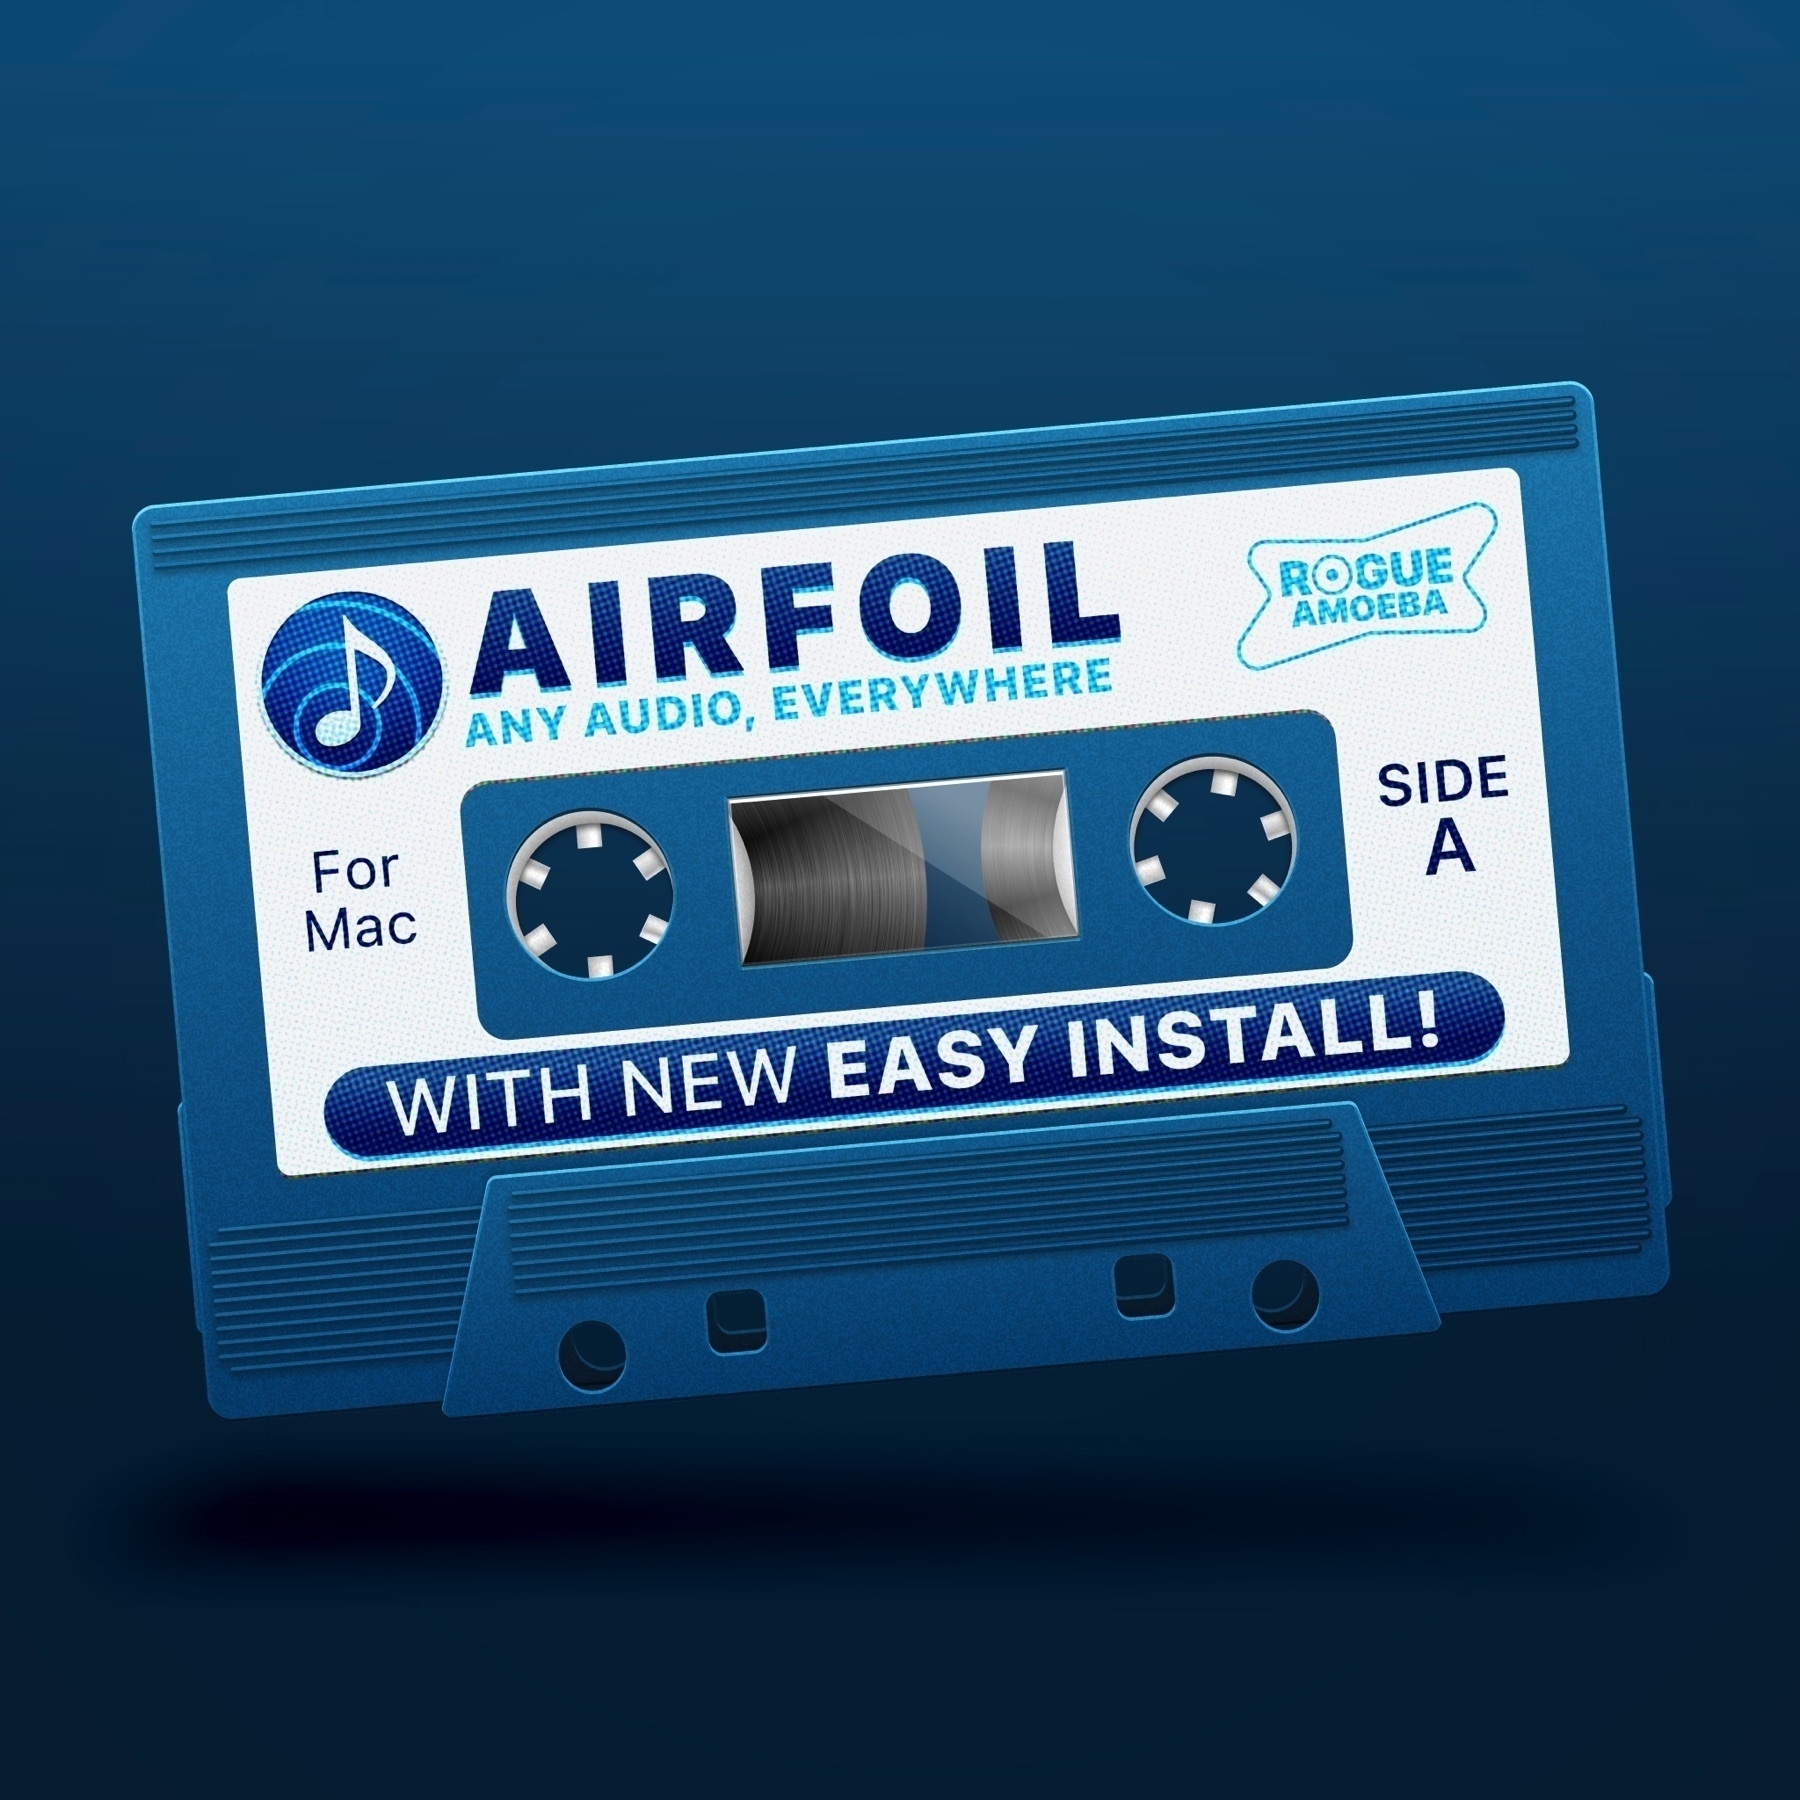 Mockup of an imagined Airfoil cassette installer